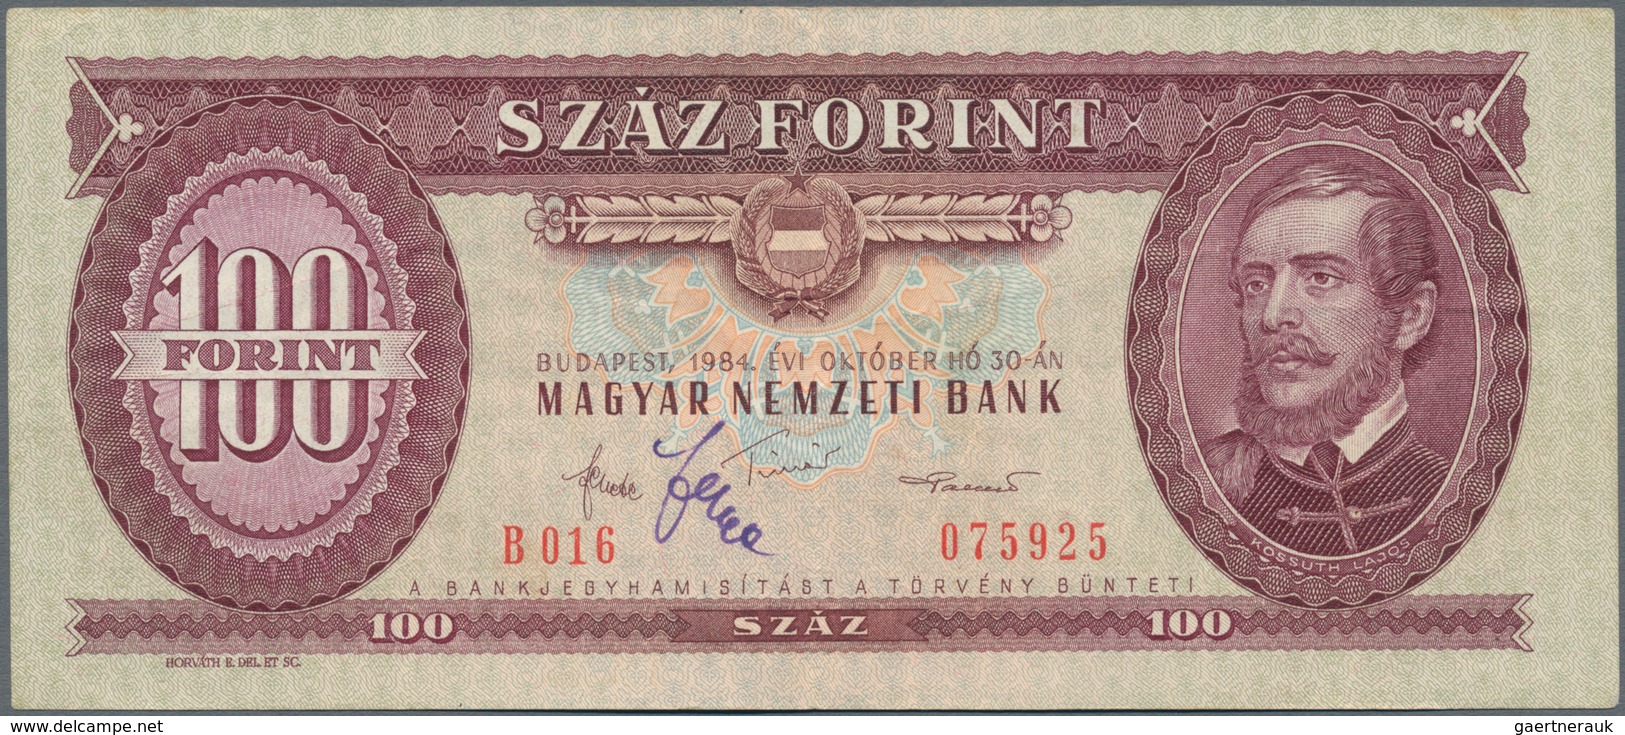 Hungary / Ungarn: Magyar Nemzeti Bank, Nice Lot With 4 Banknotes, 2x 50 Forint 1986 And 2x 100 Forin - Ungarn